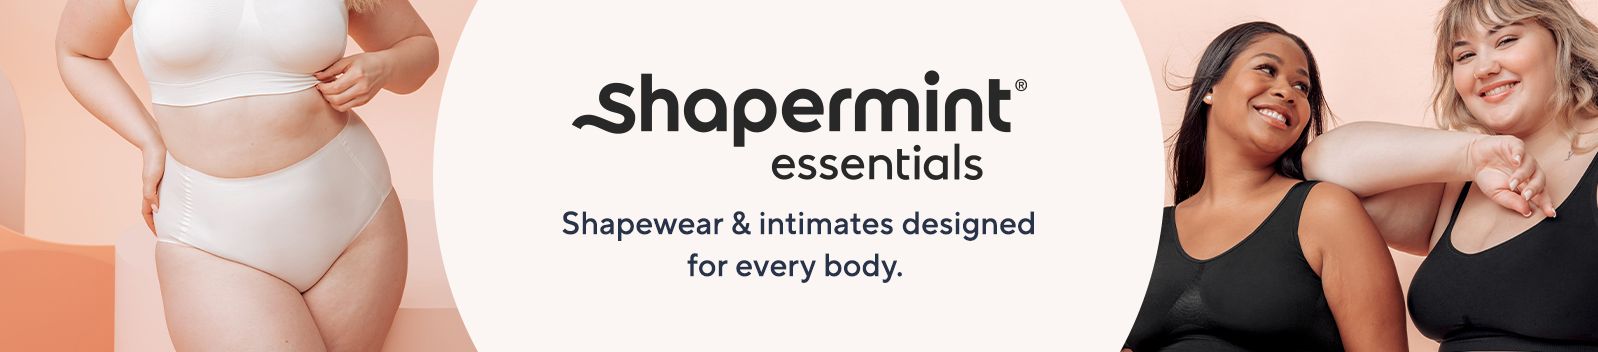 Shapermint - The easiest way to shop shapewear online: 🔔 Low